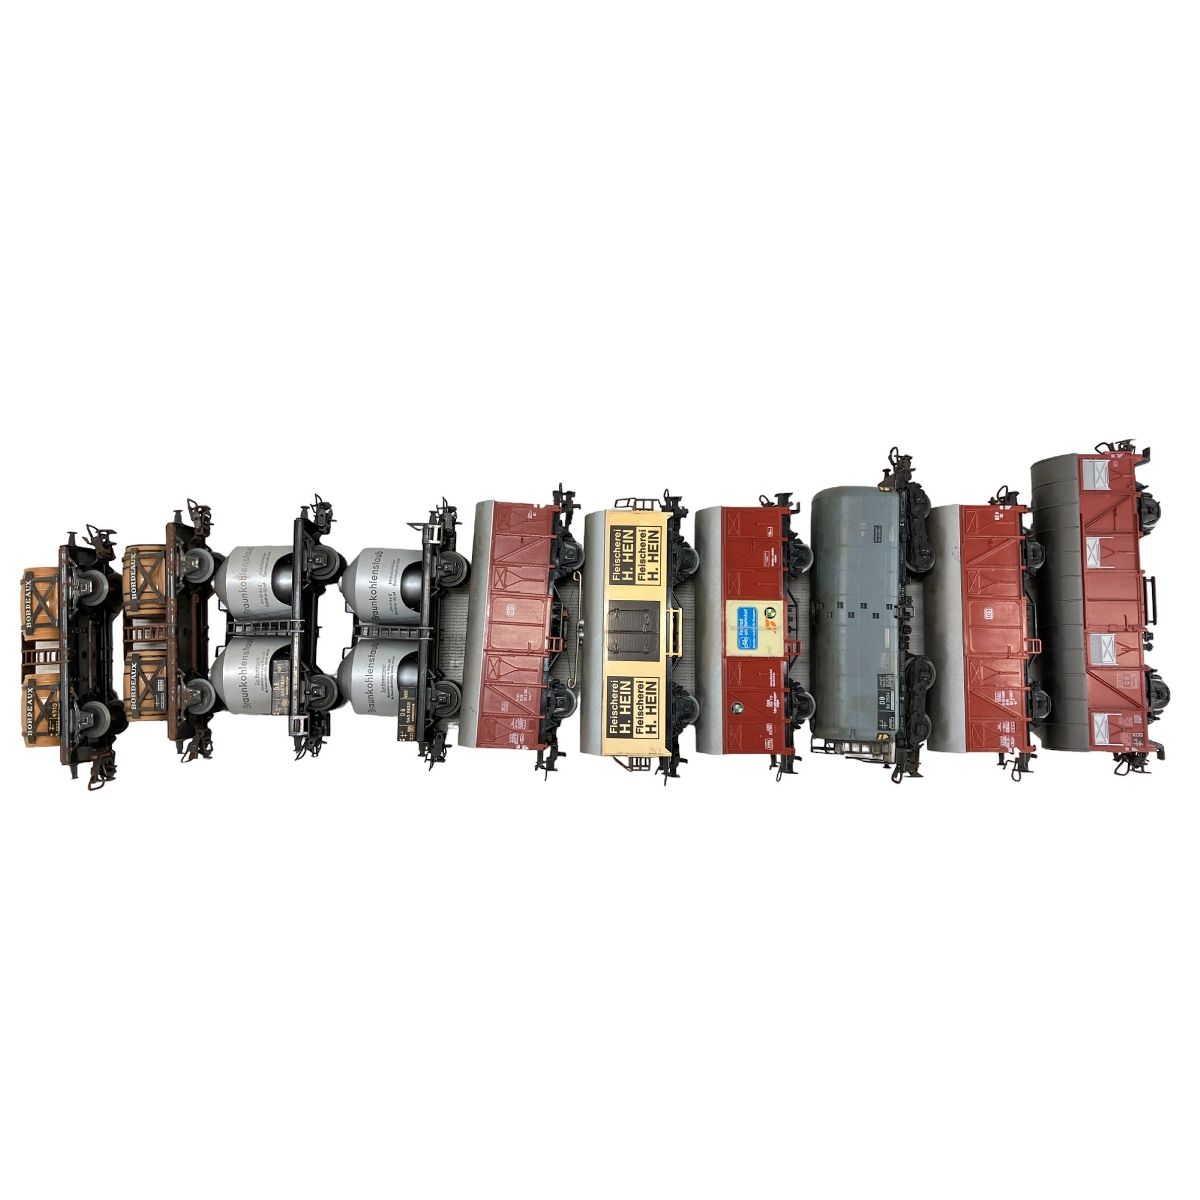 詳細不明 貨車 10両セット 鉄道模型 HO  Y8946861